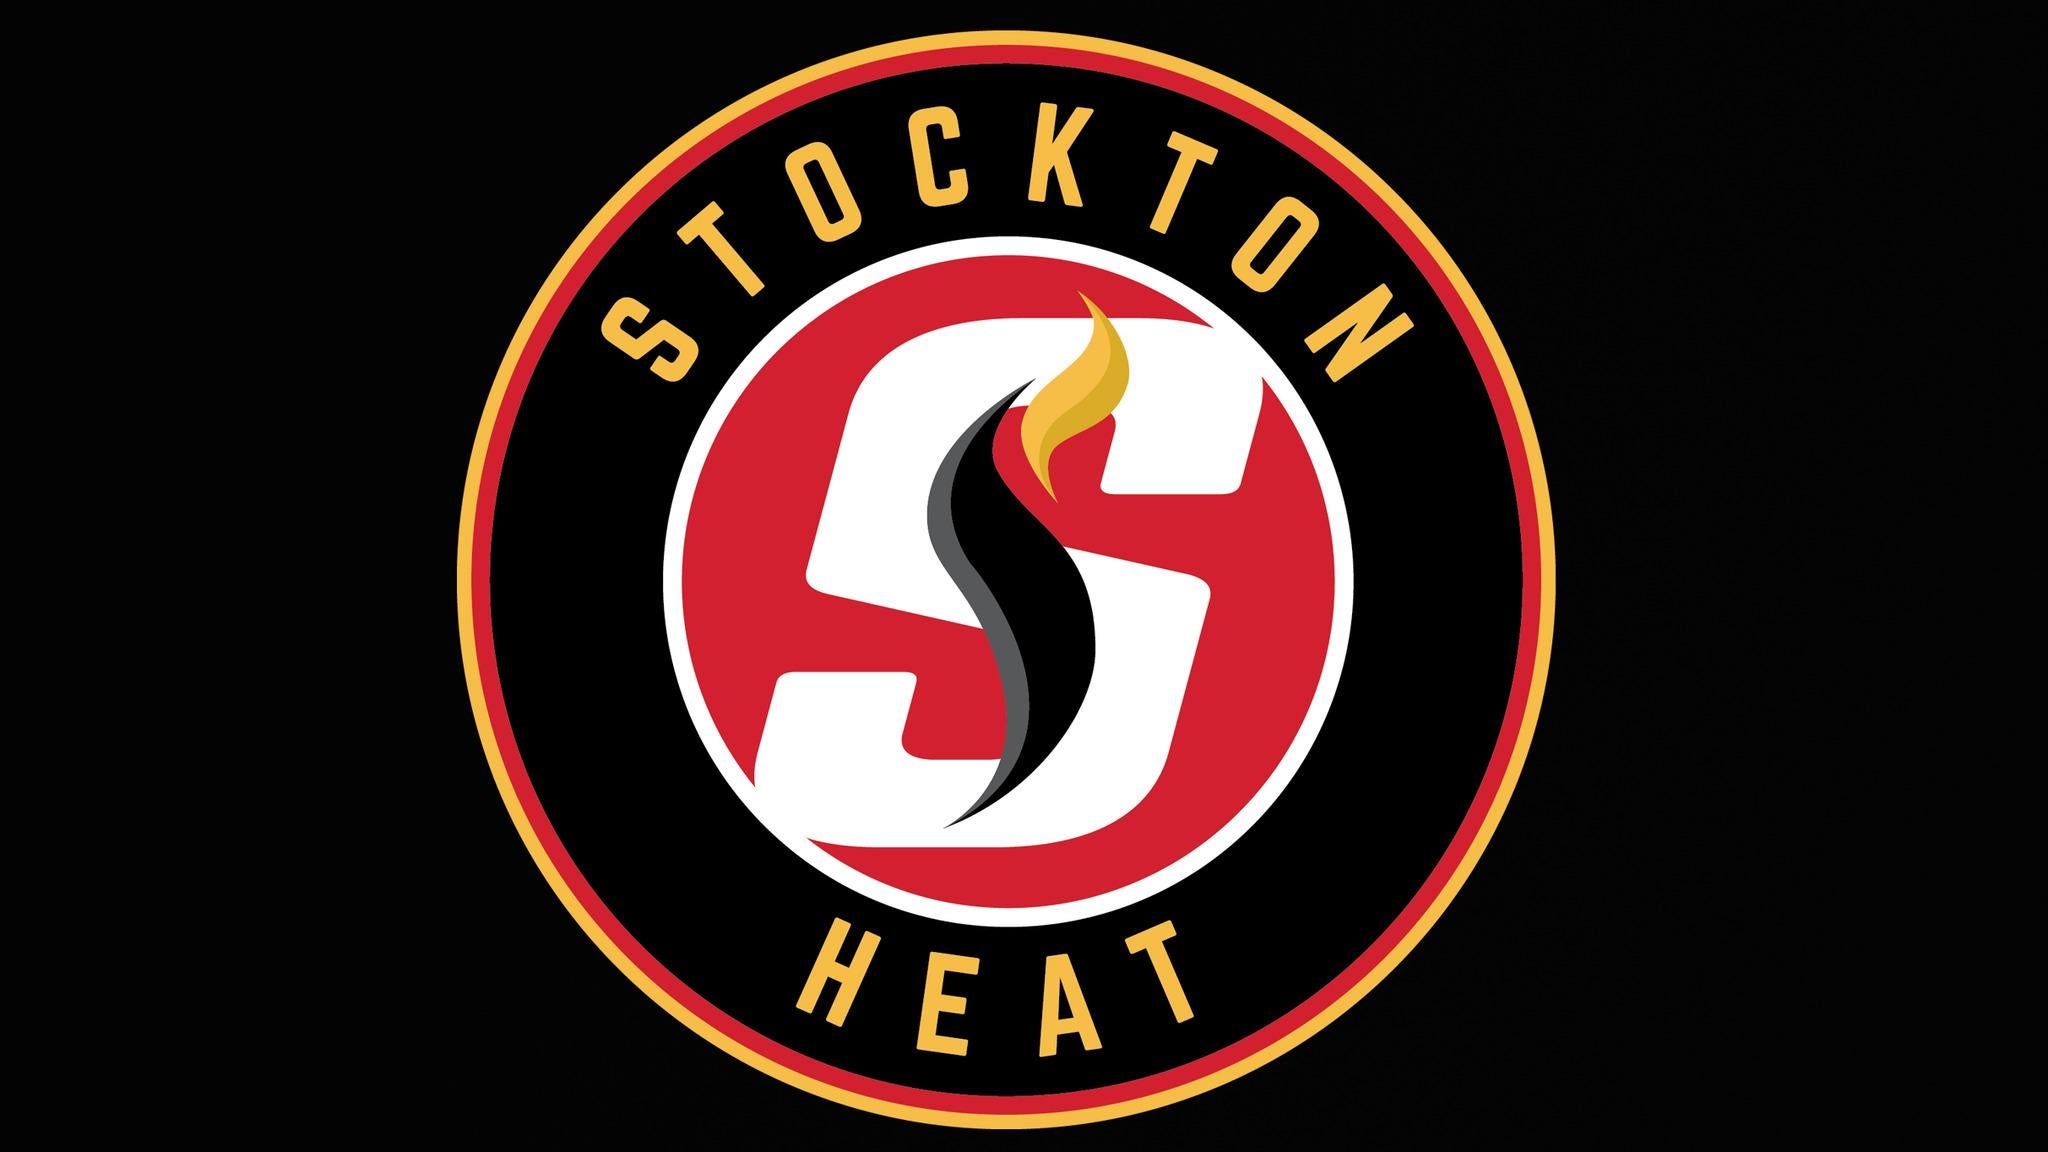 Stockton Heat Pacific Division Finals Round 3 Game 2